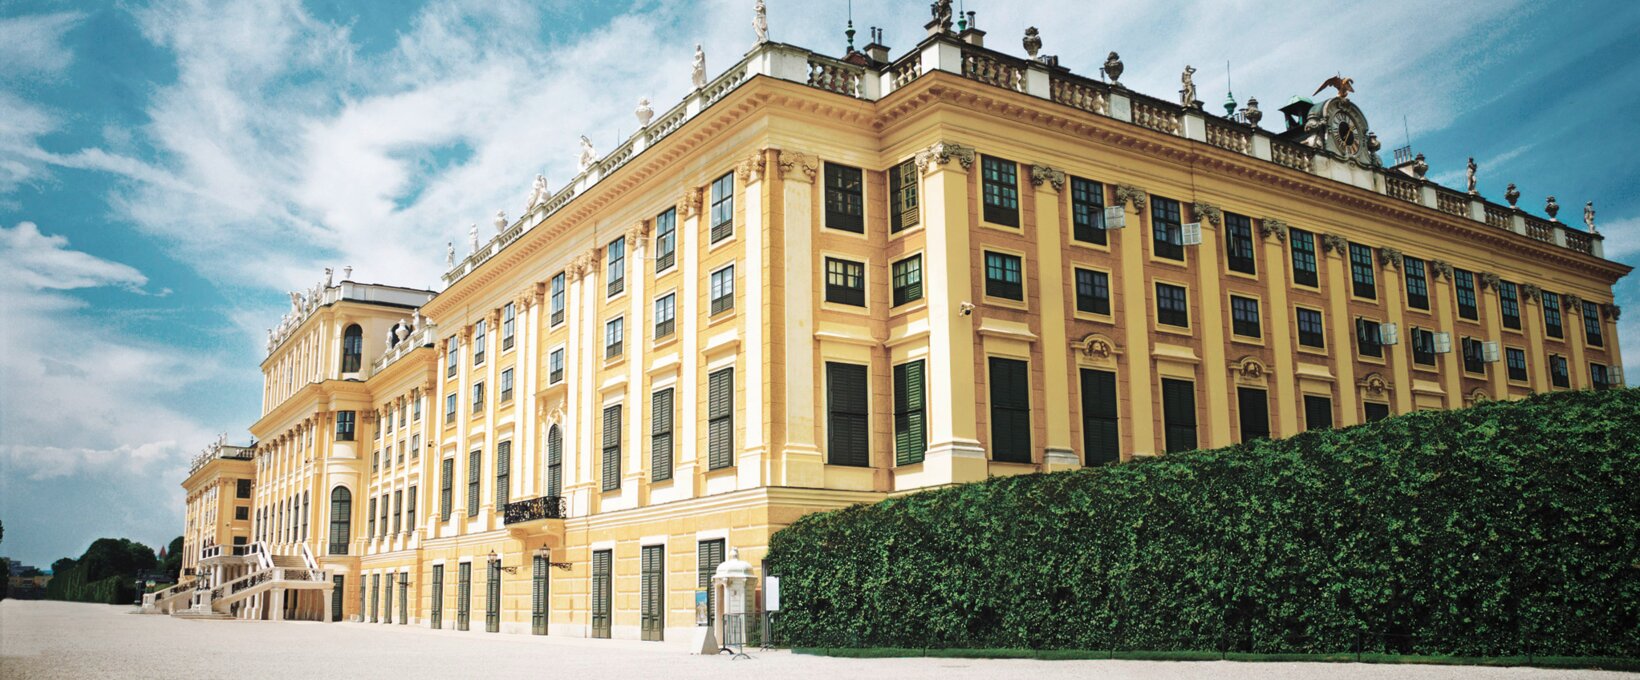 Castle Schönbrunn